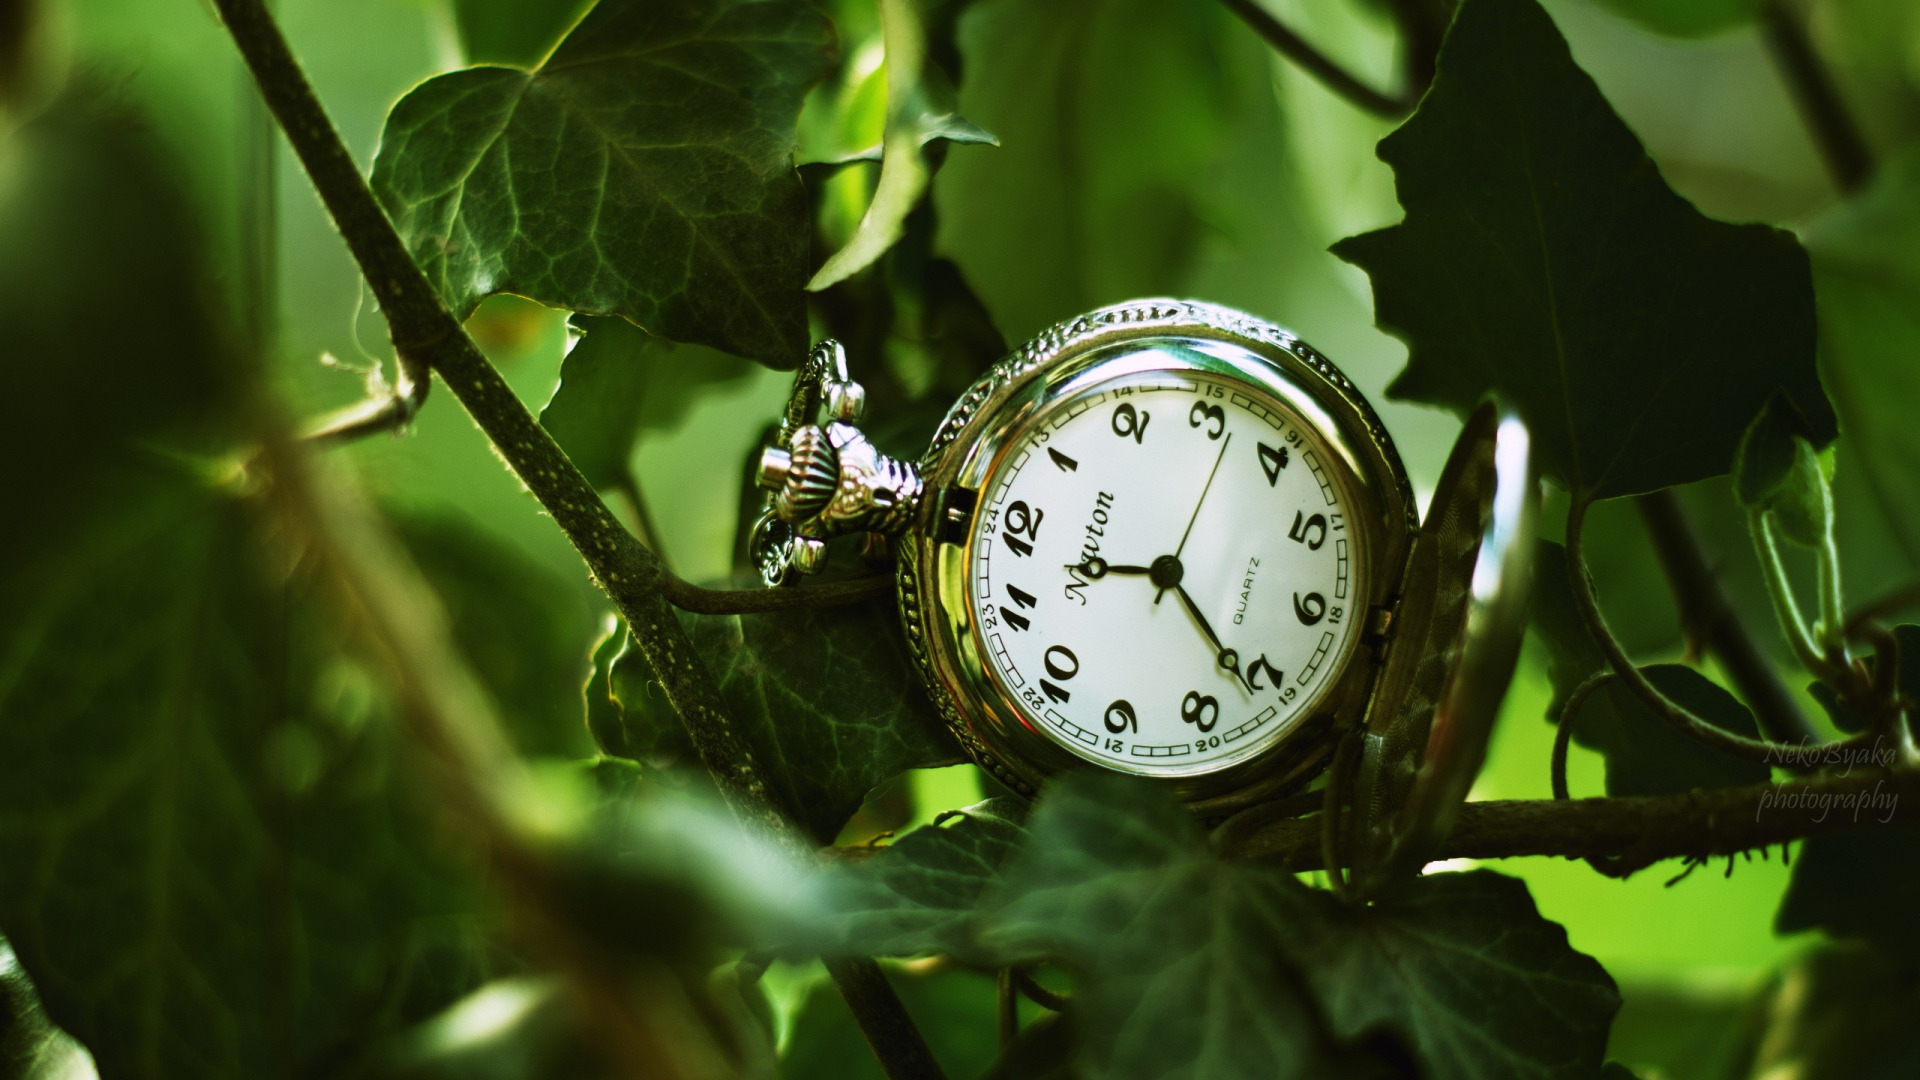 Бережок часов. Часы. Часы на природе. Часы в траве. Часы на фоне природы.